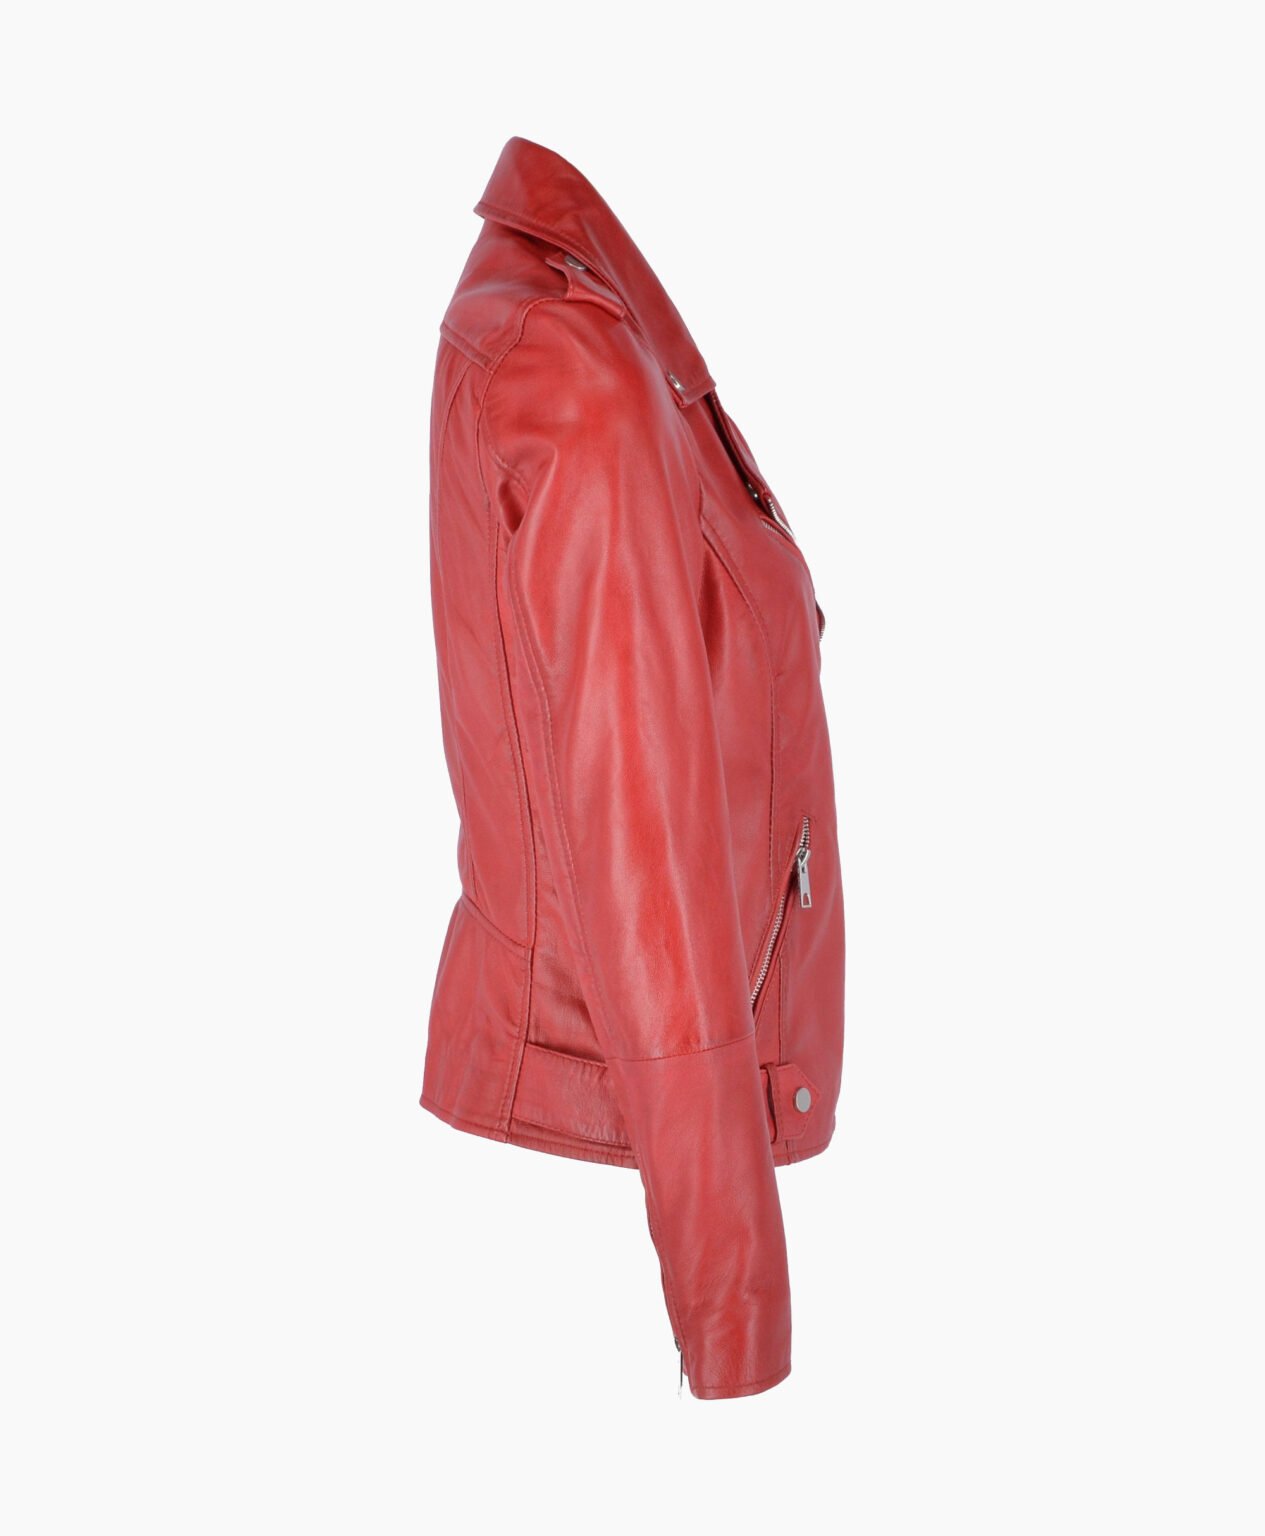 vogue-jacket-leather-biker-jacket-red-ruston-image203